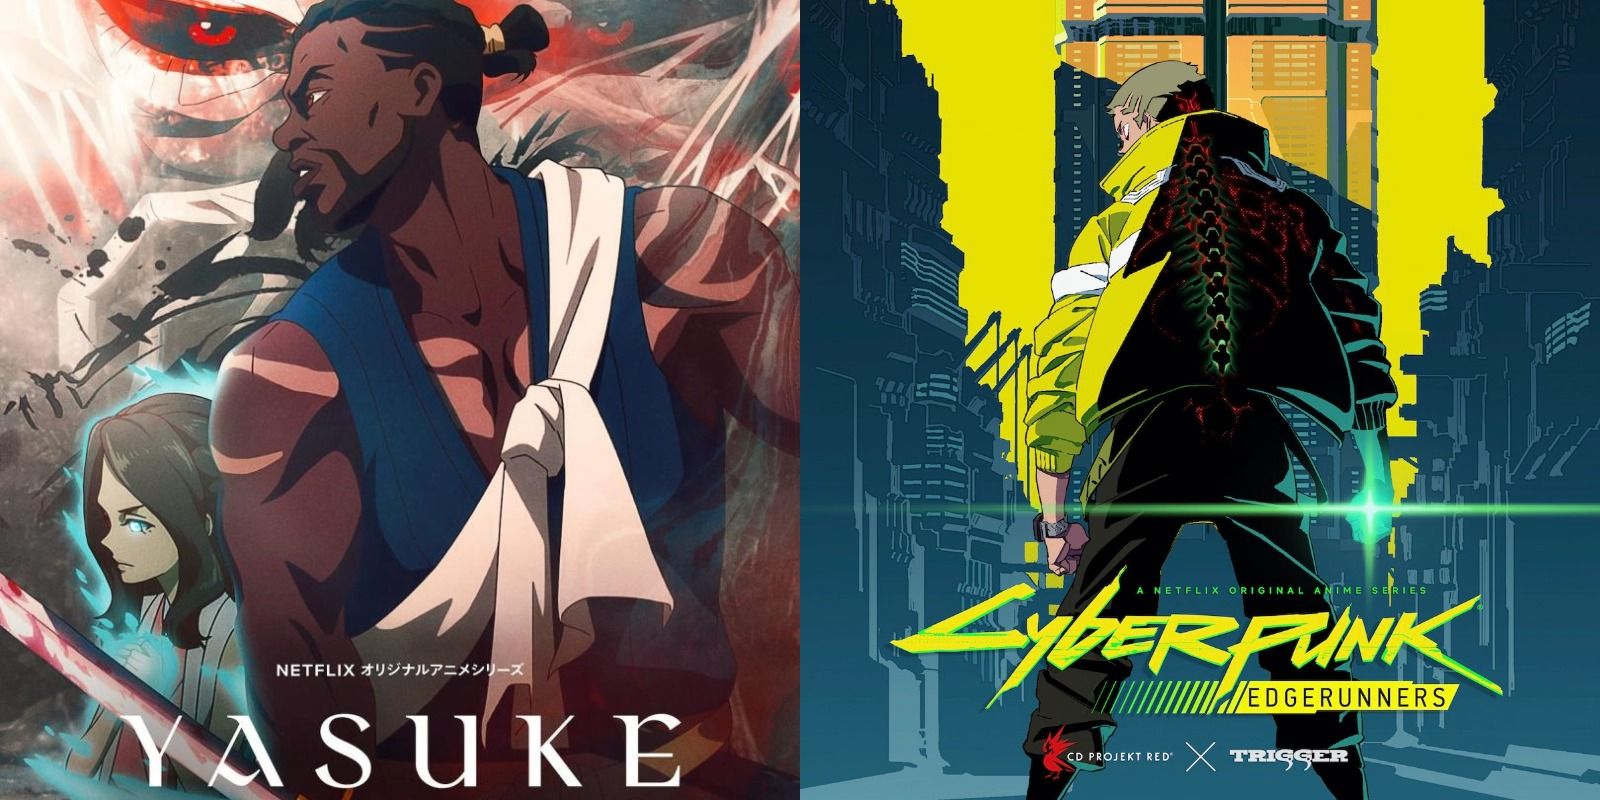 Netflix's Yasuke and upcoming Cyberpunk Edgerunners anime series